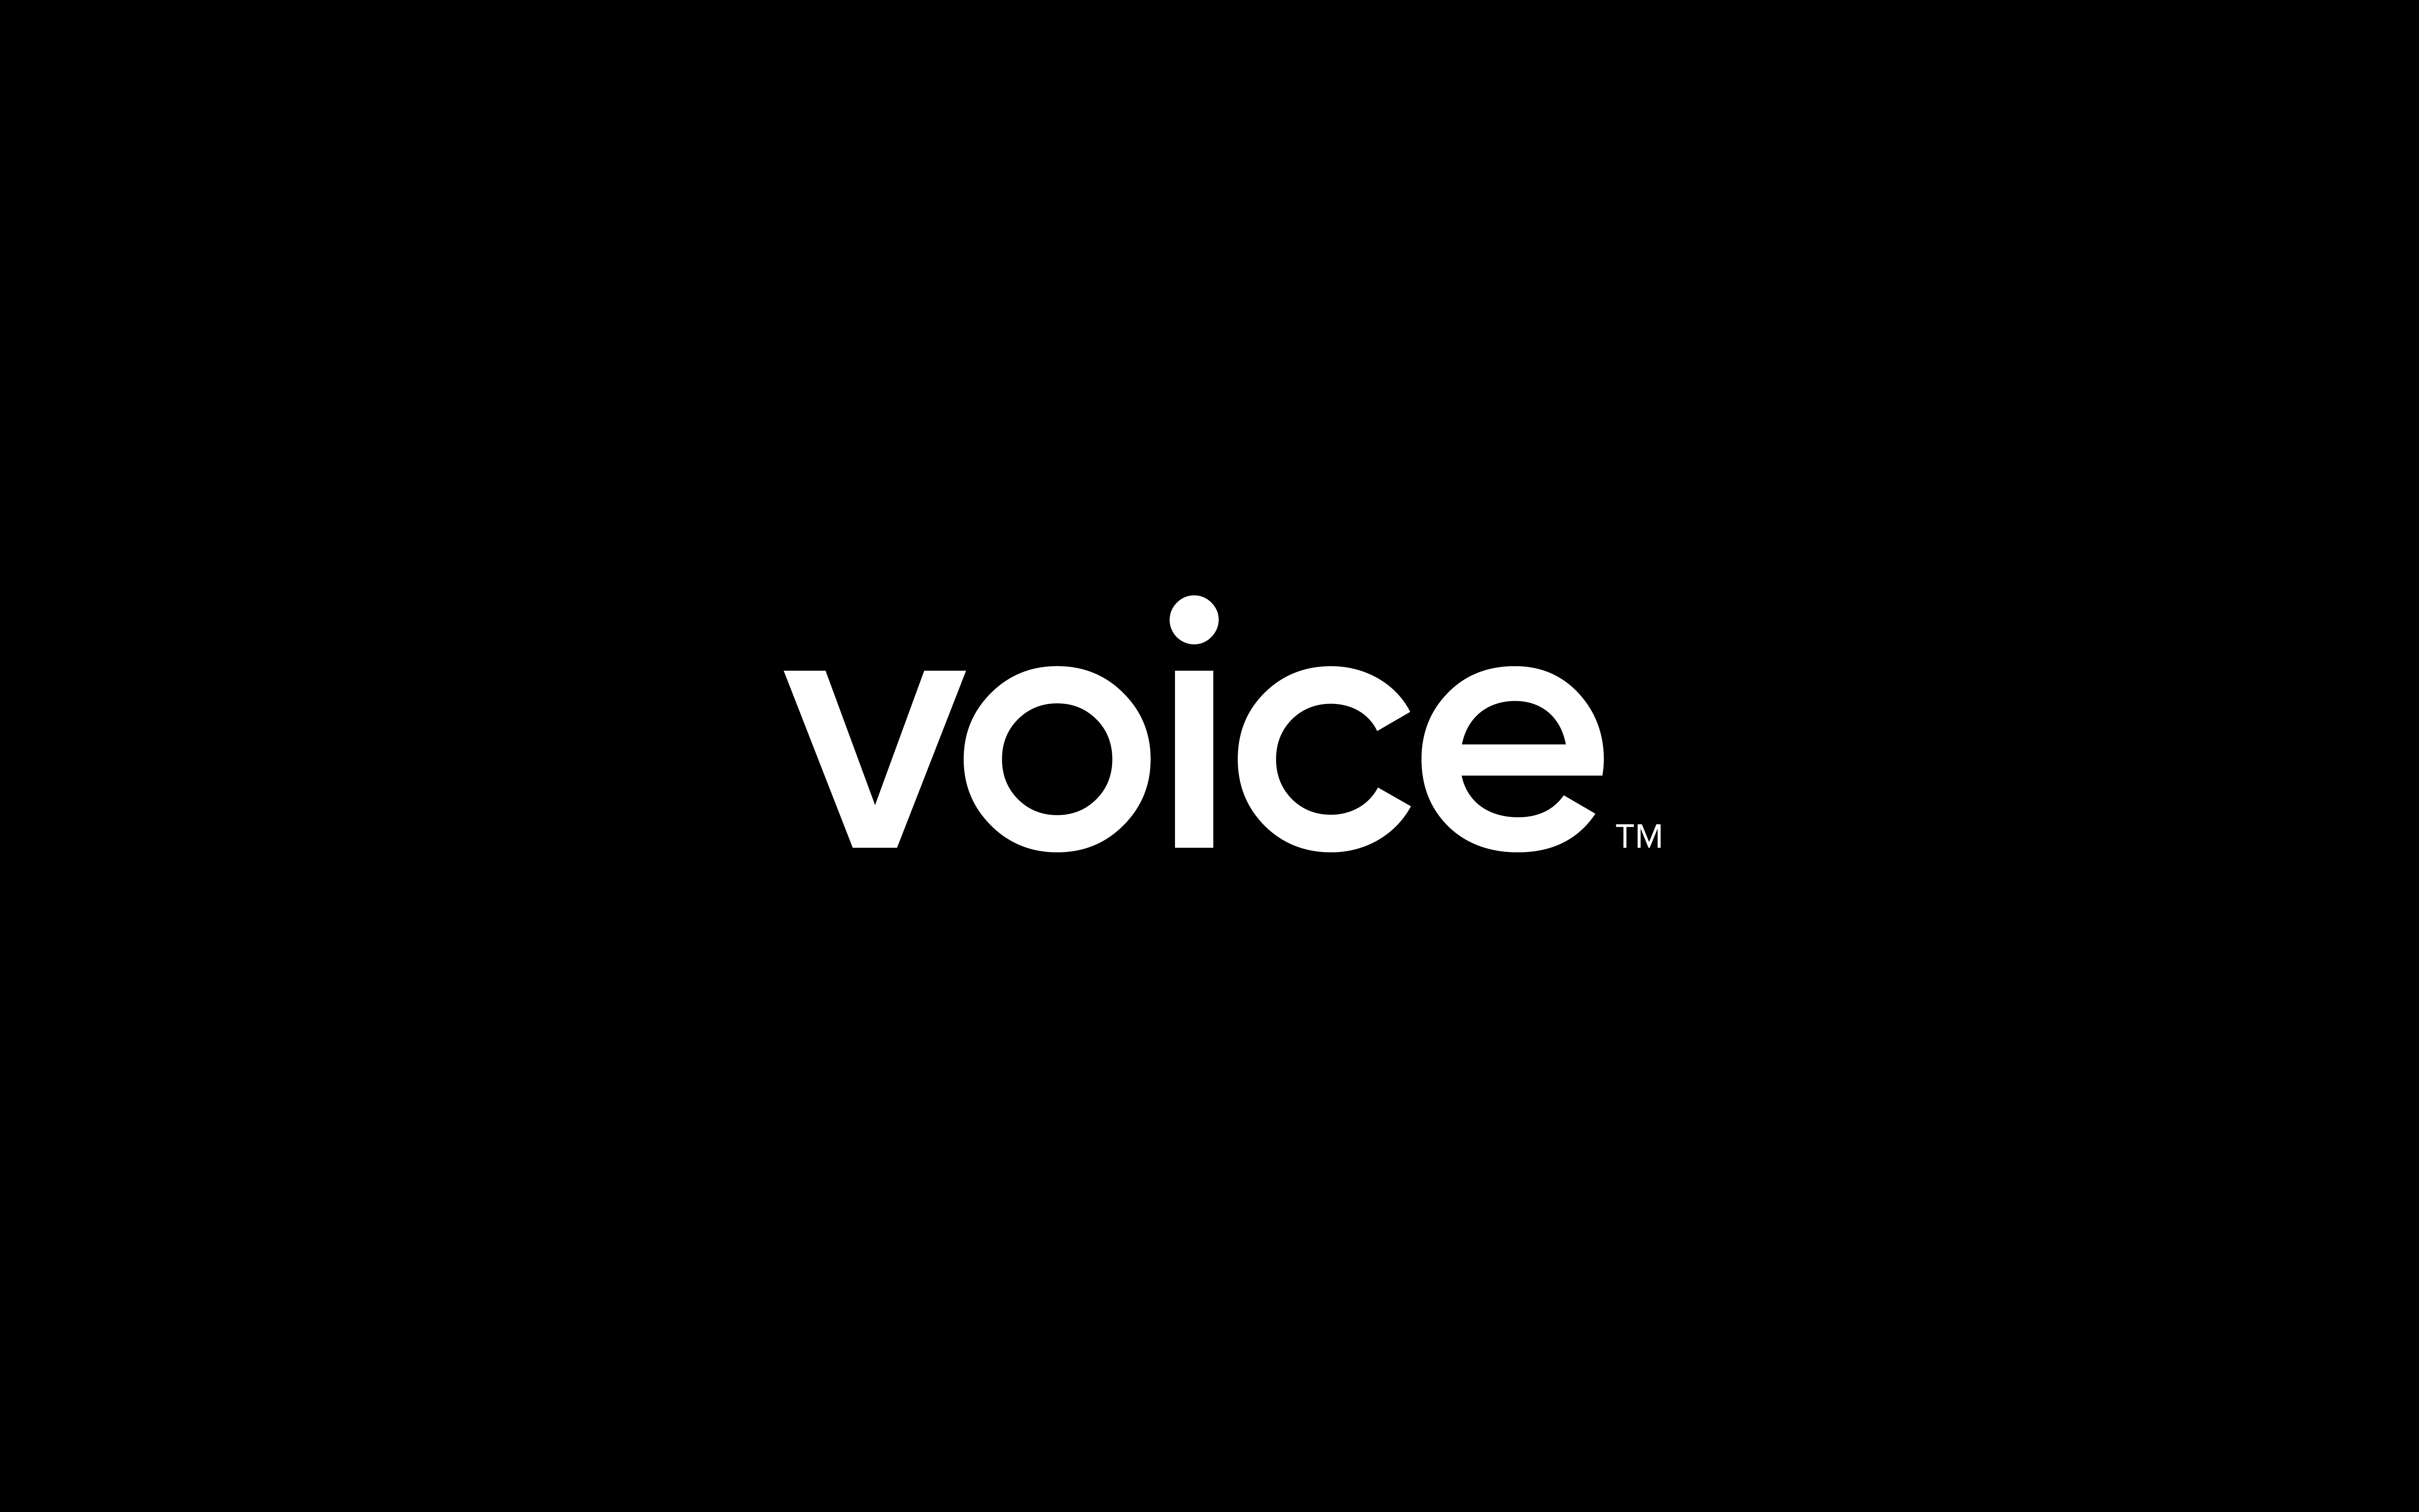 New Voice logo black background